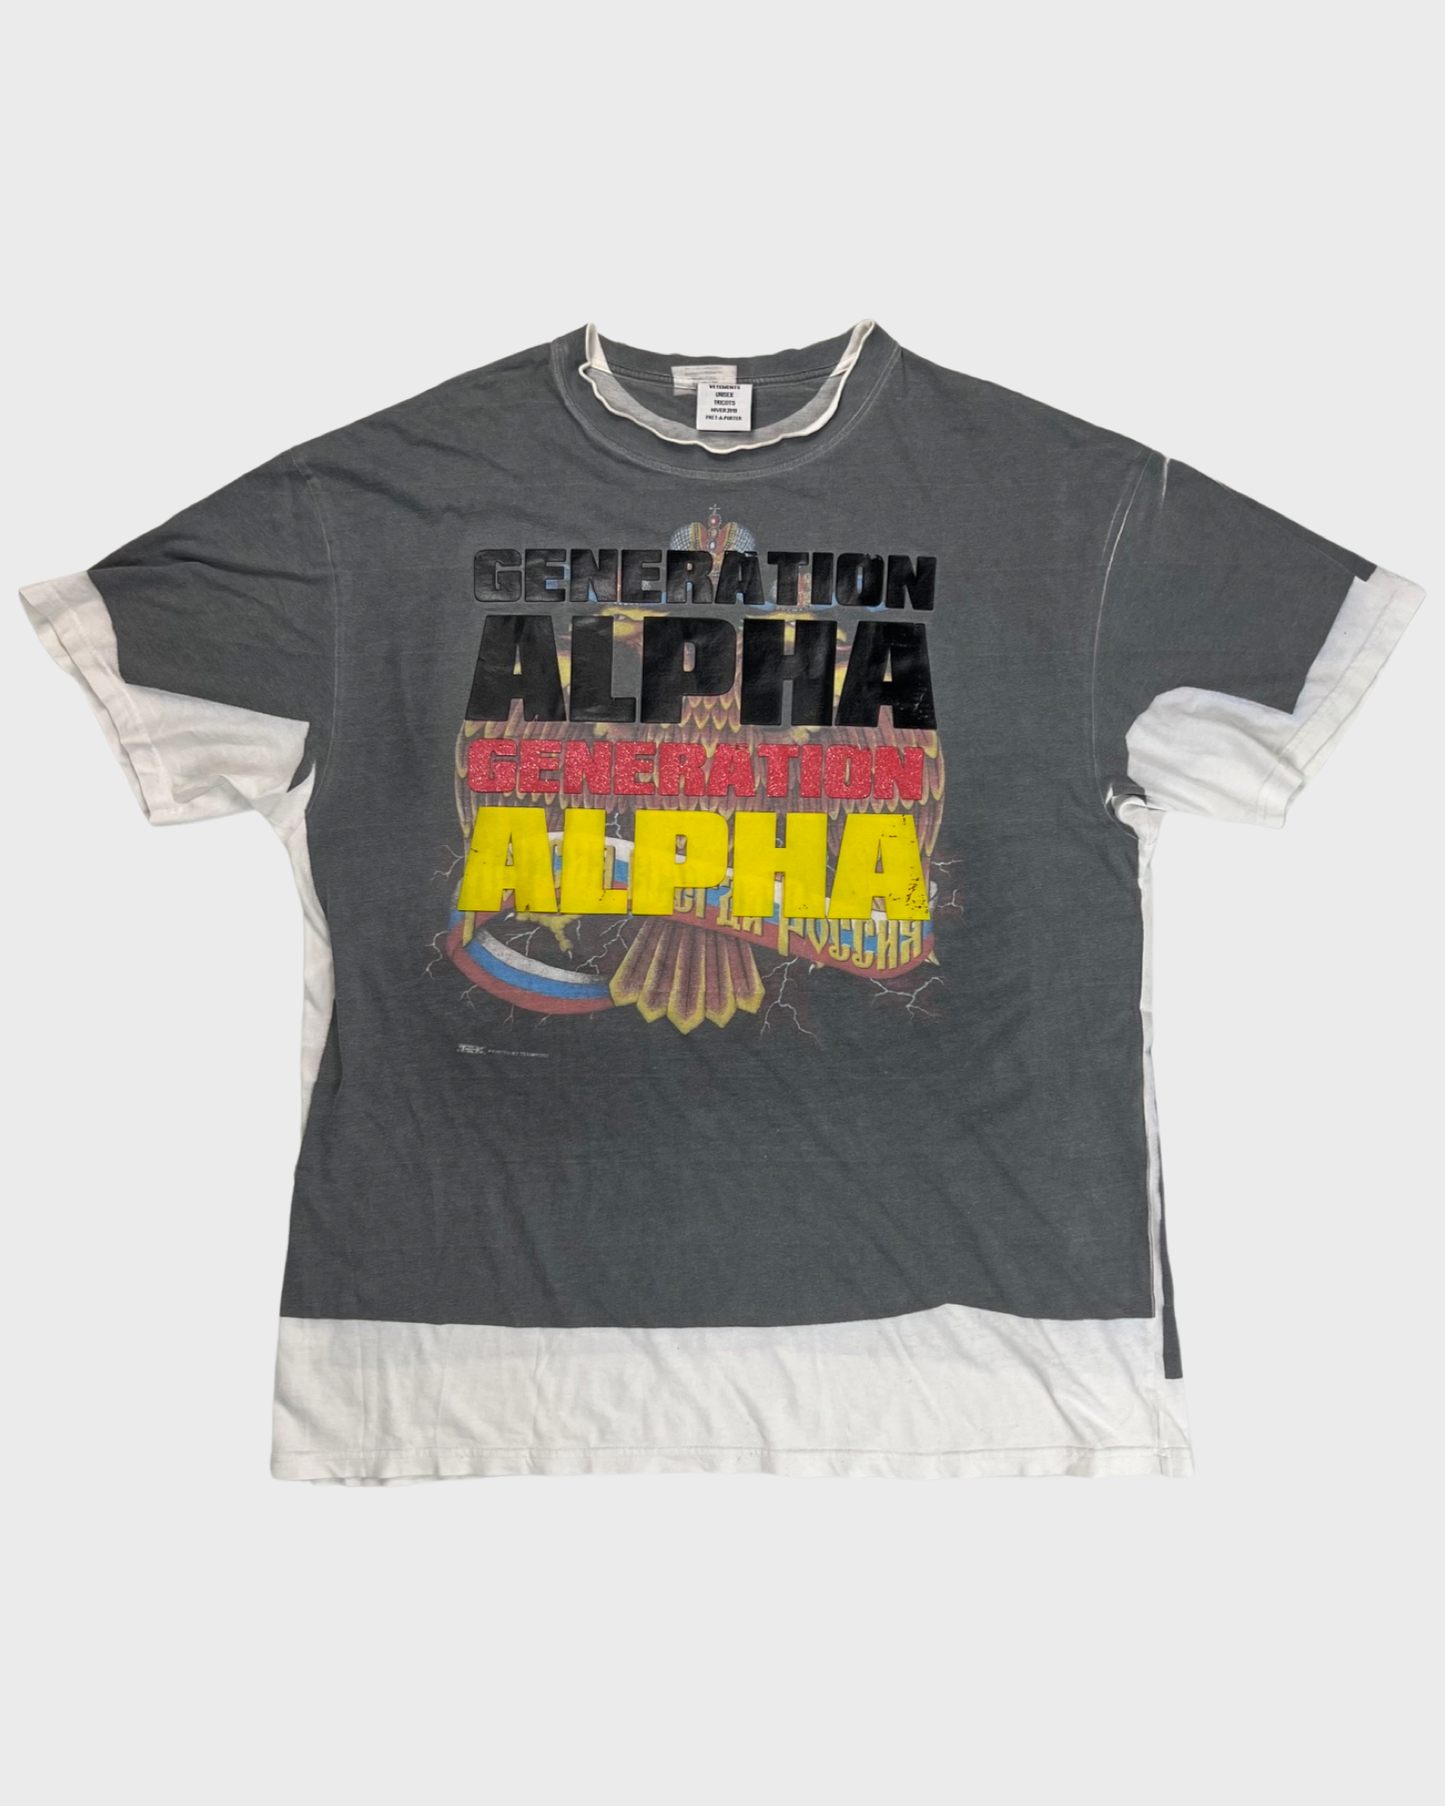 Vetements AW18 ALPHA GENERATION ALPHA Tee  T-shirt  SZ:XS|S|M